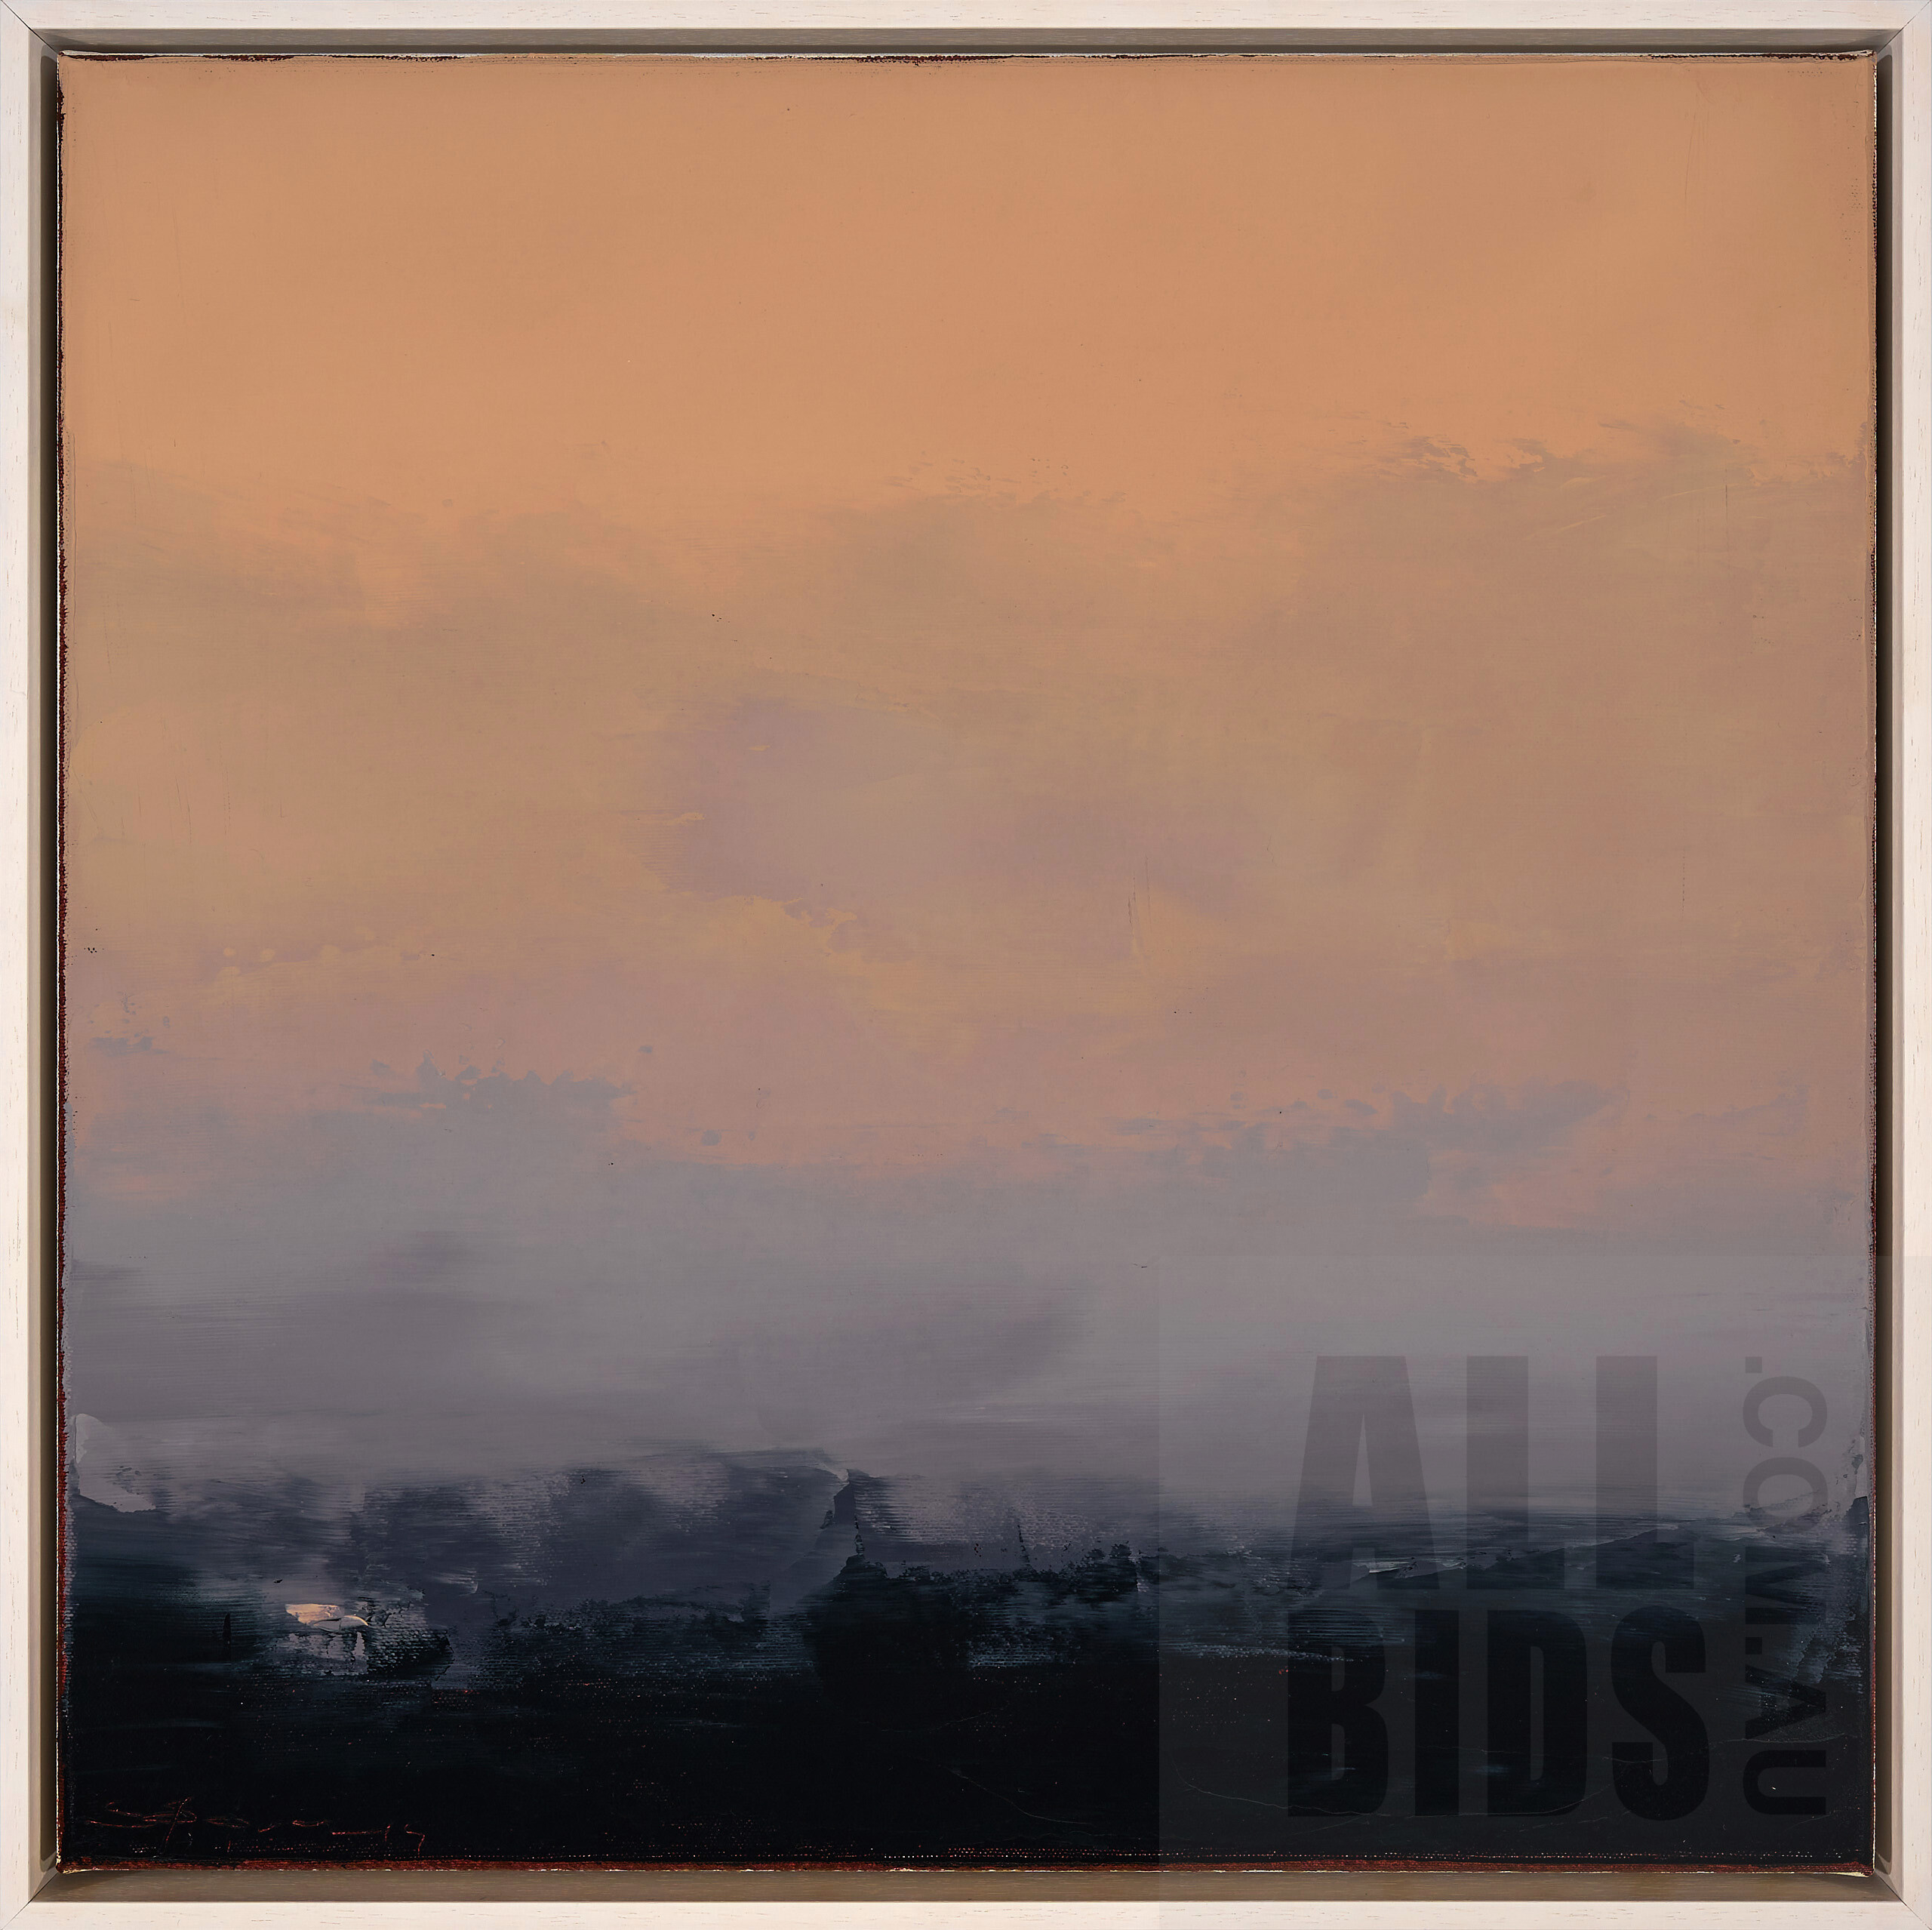 'Sokquon Tran (born 1969), Smoke Haze II, Southern Highlands, Oil on Canvas, 48.5 x 48.5 cm'